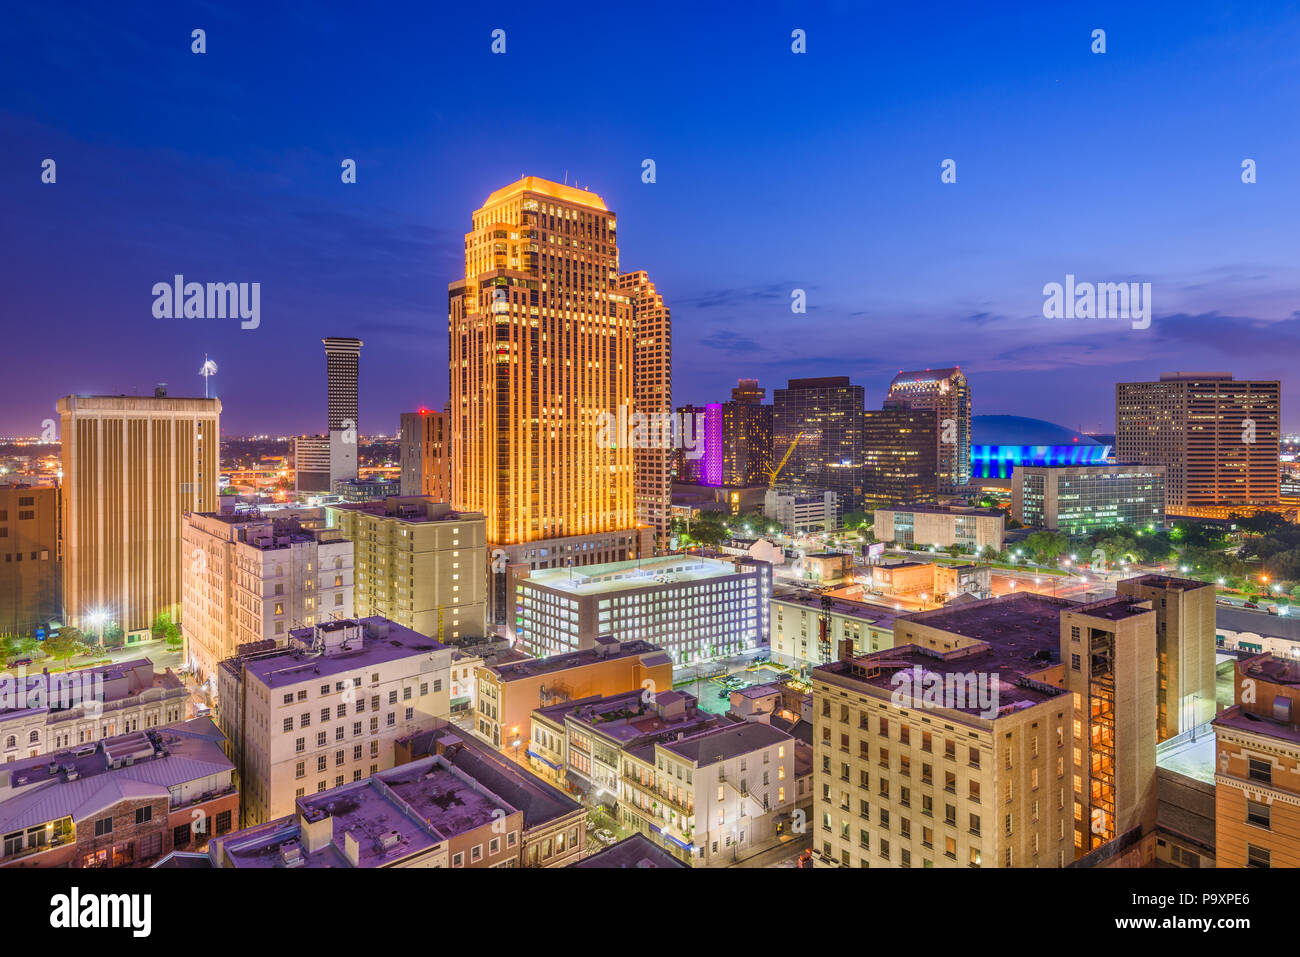 New Orleans, Louisiana, USA downtown CBD skyline at night. Stock Photo